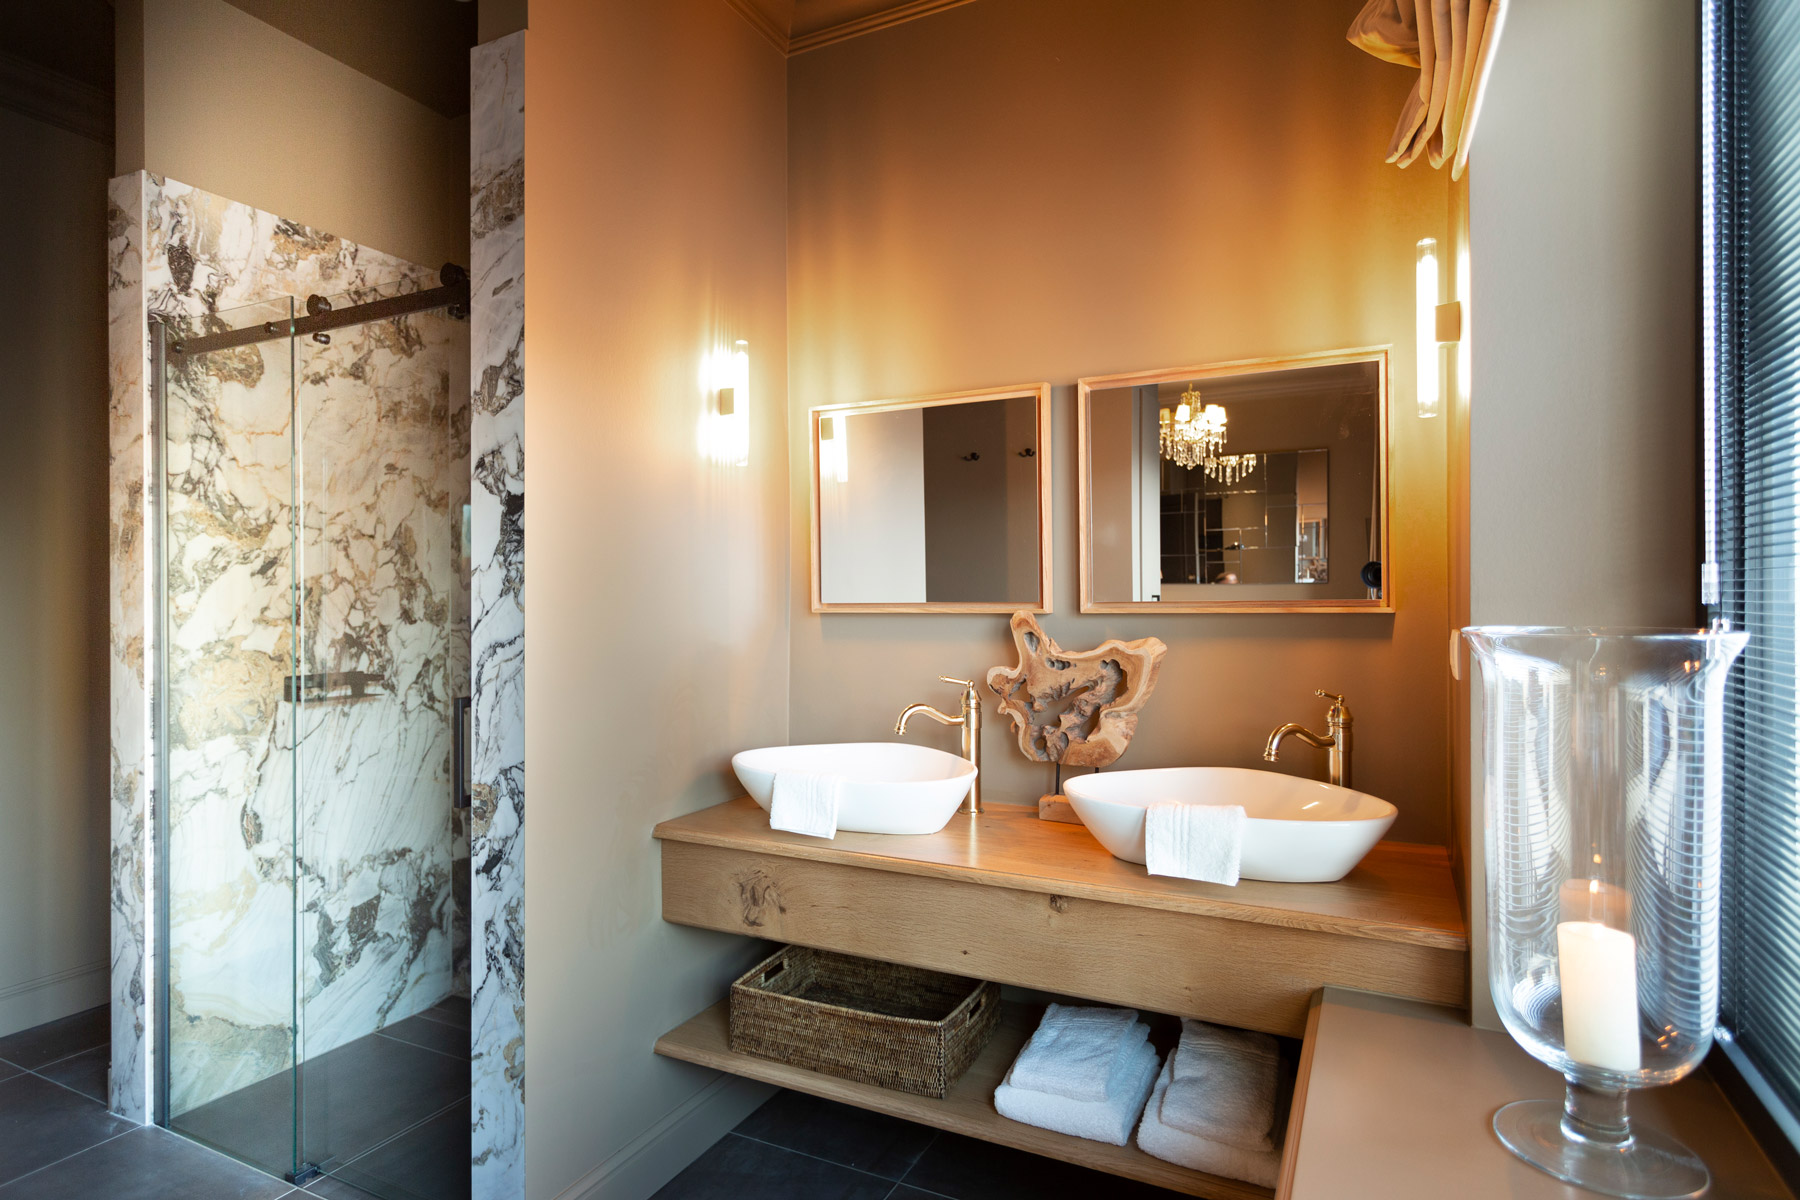 Luxury Bed & Breakfast Mansion9 Bruges Rooms